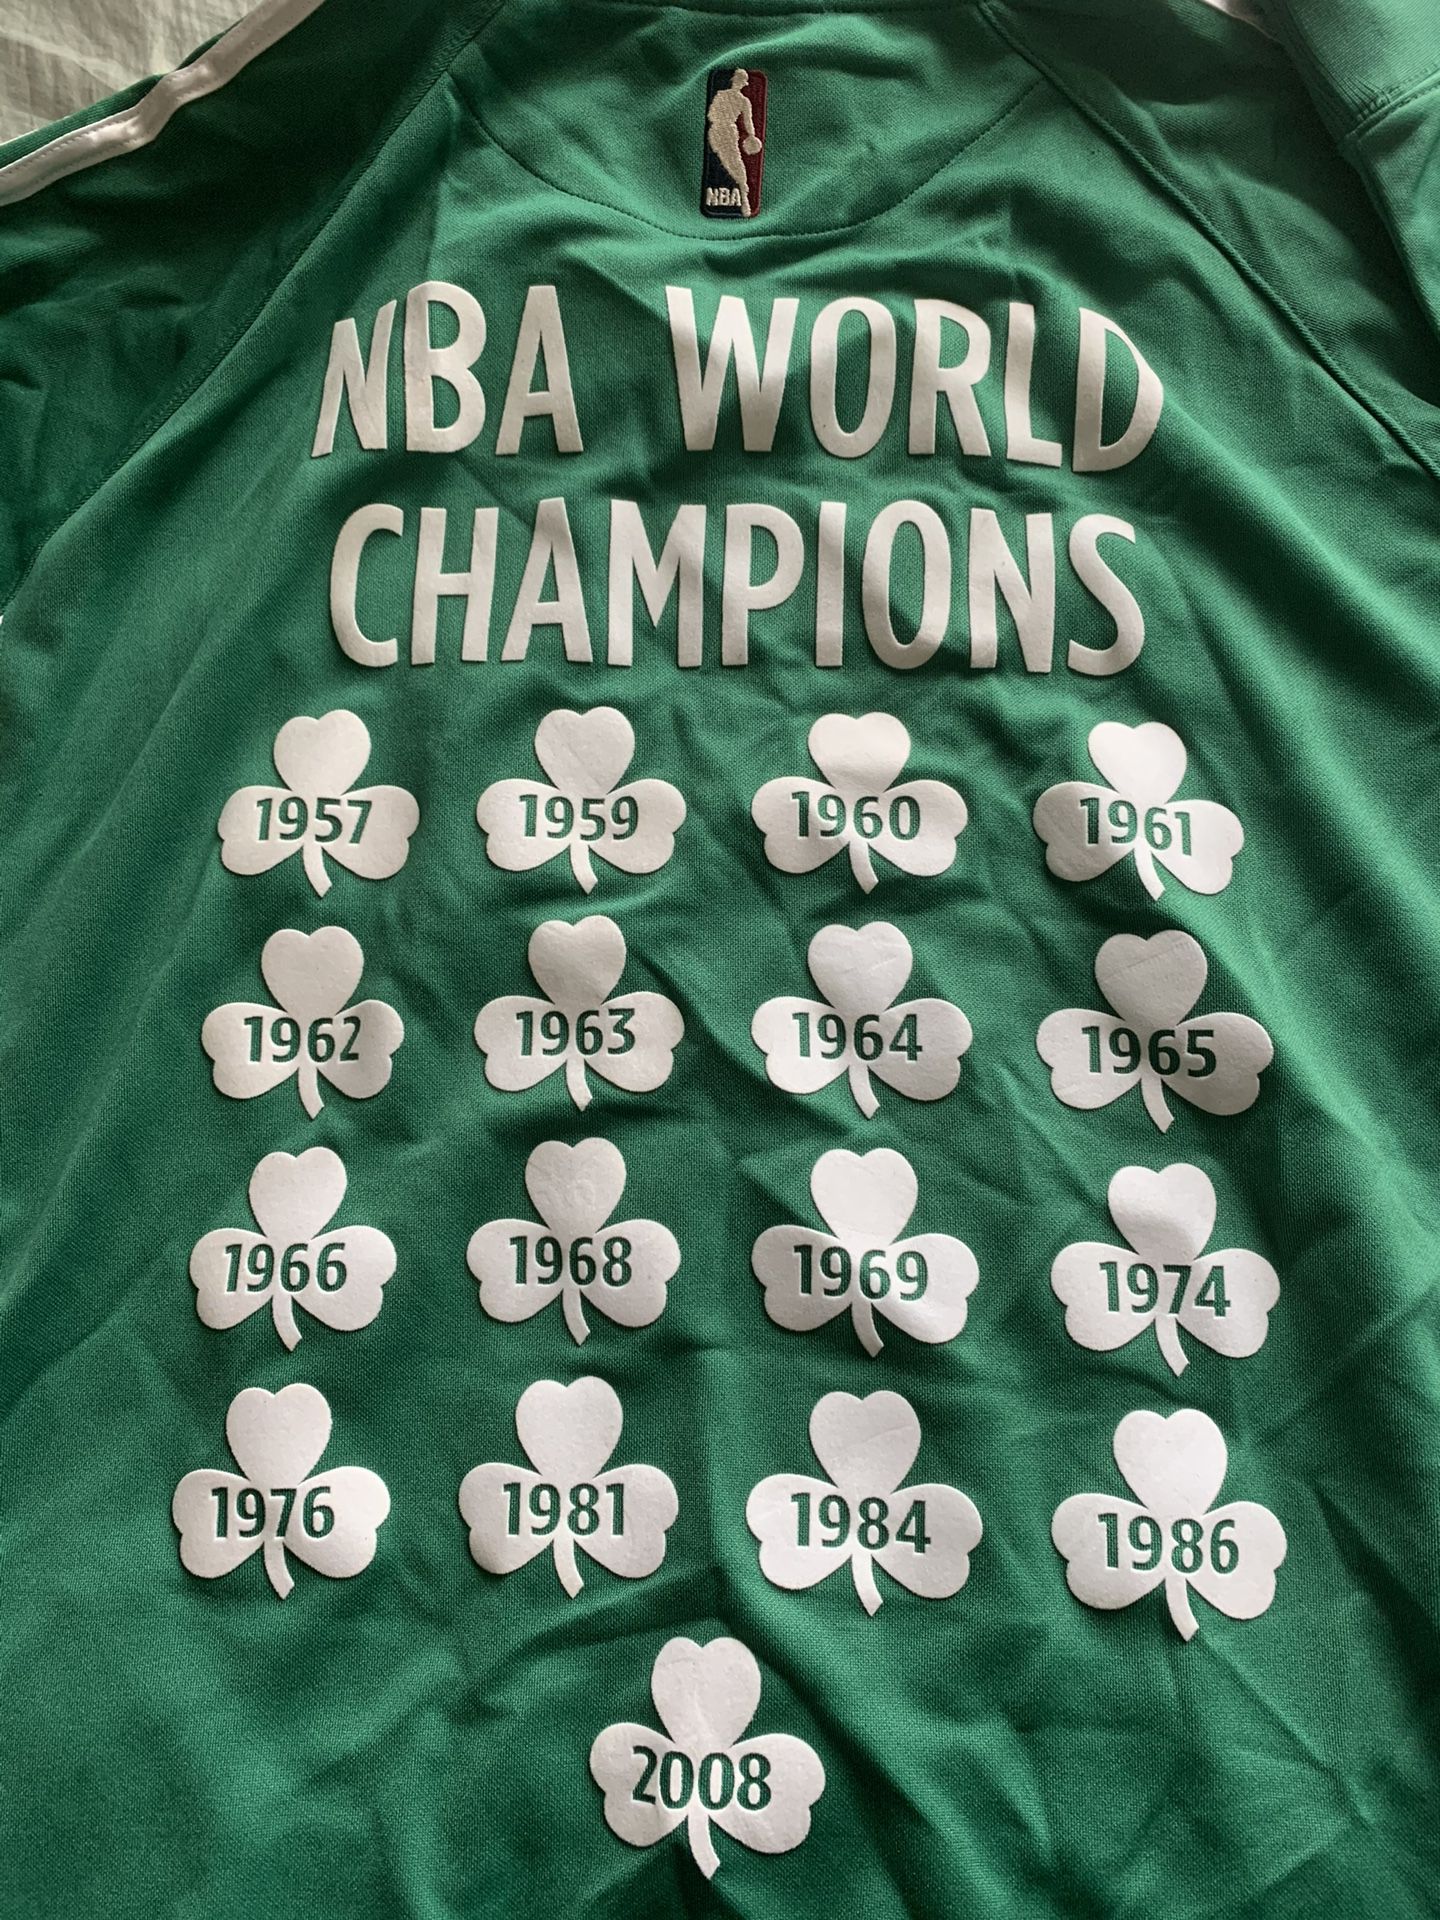 RARE Adidas Boston Celtics NBA World Professional Championship Warm-Up  Jacket XL